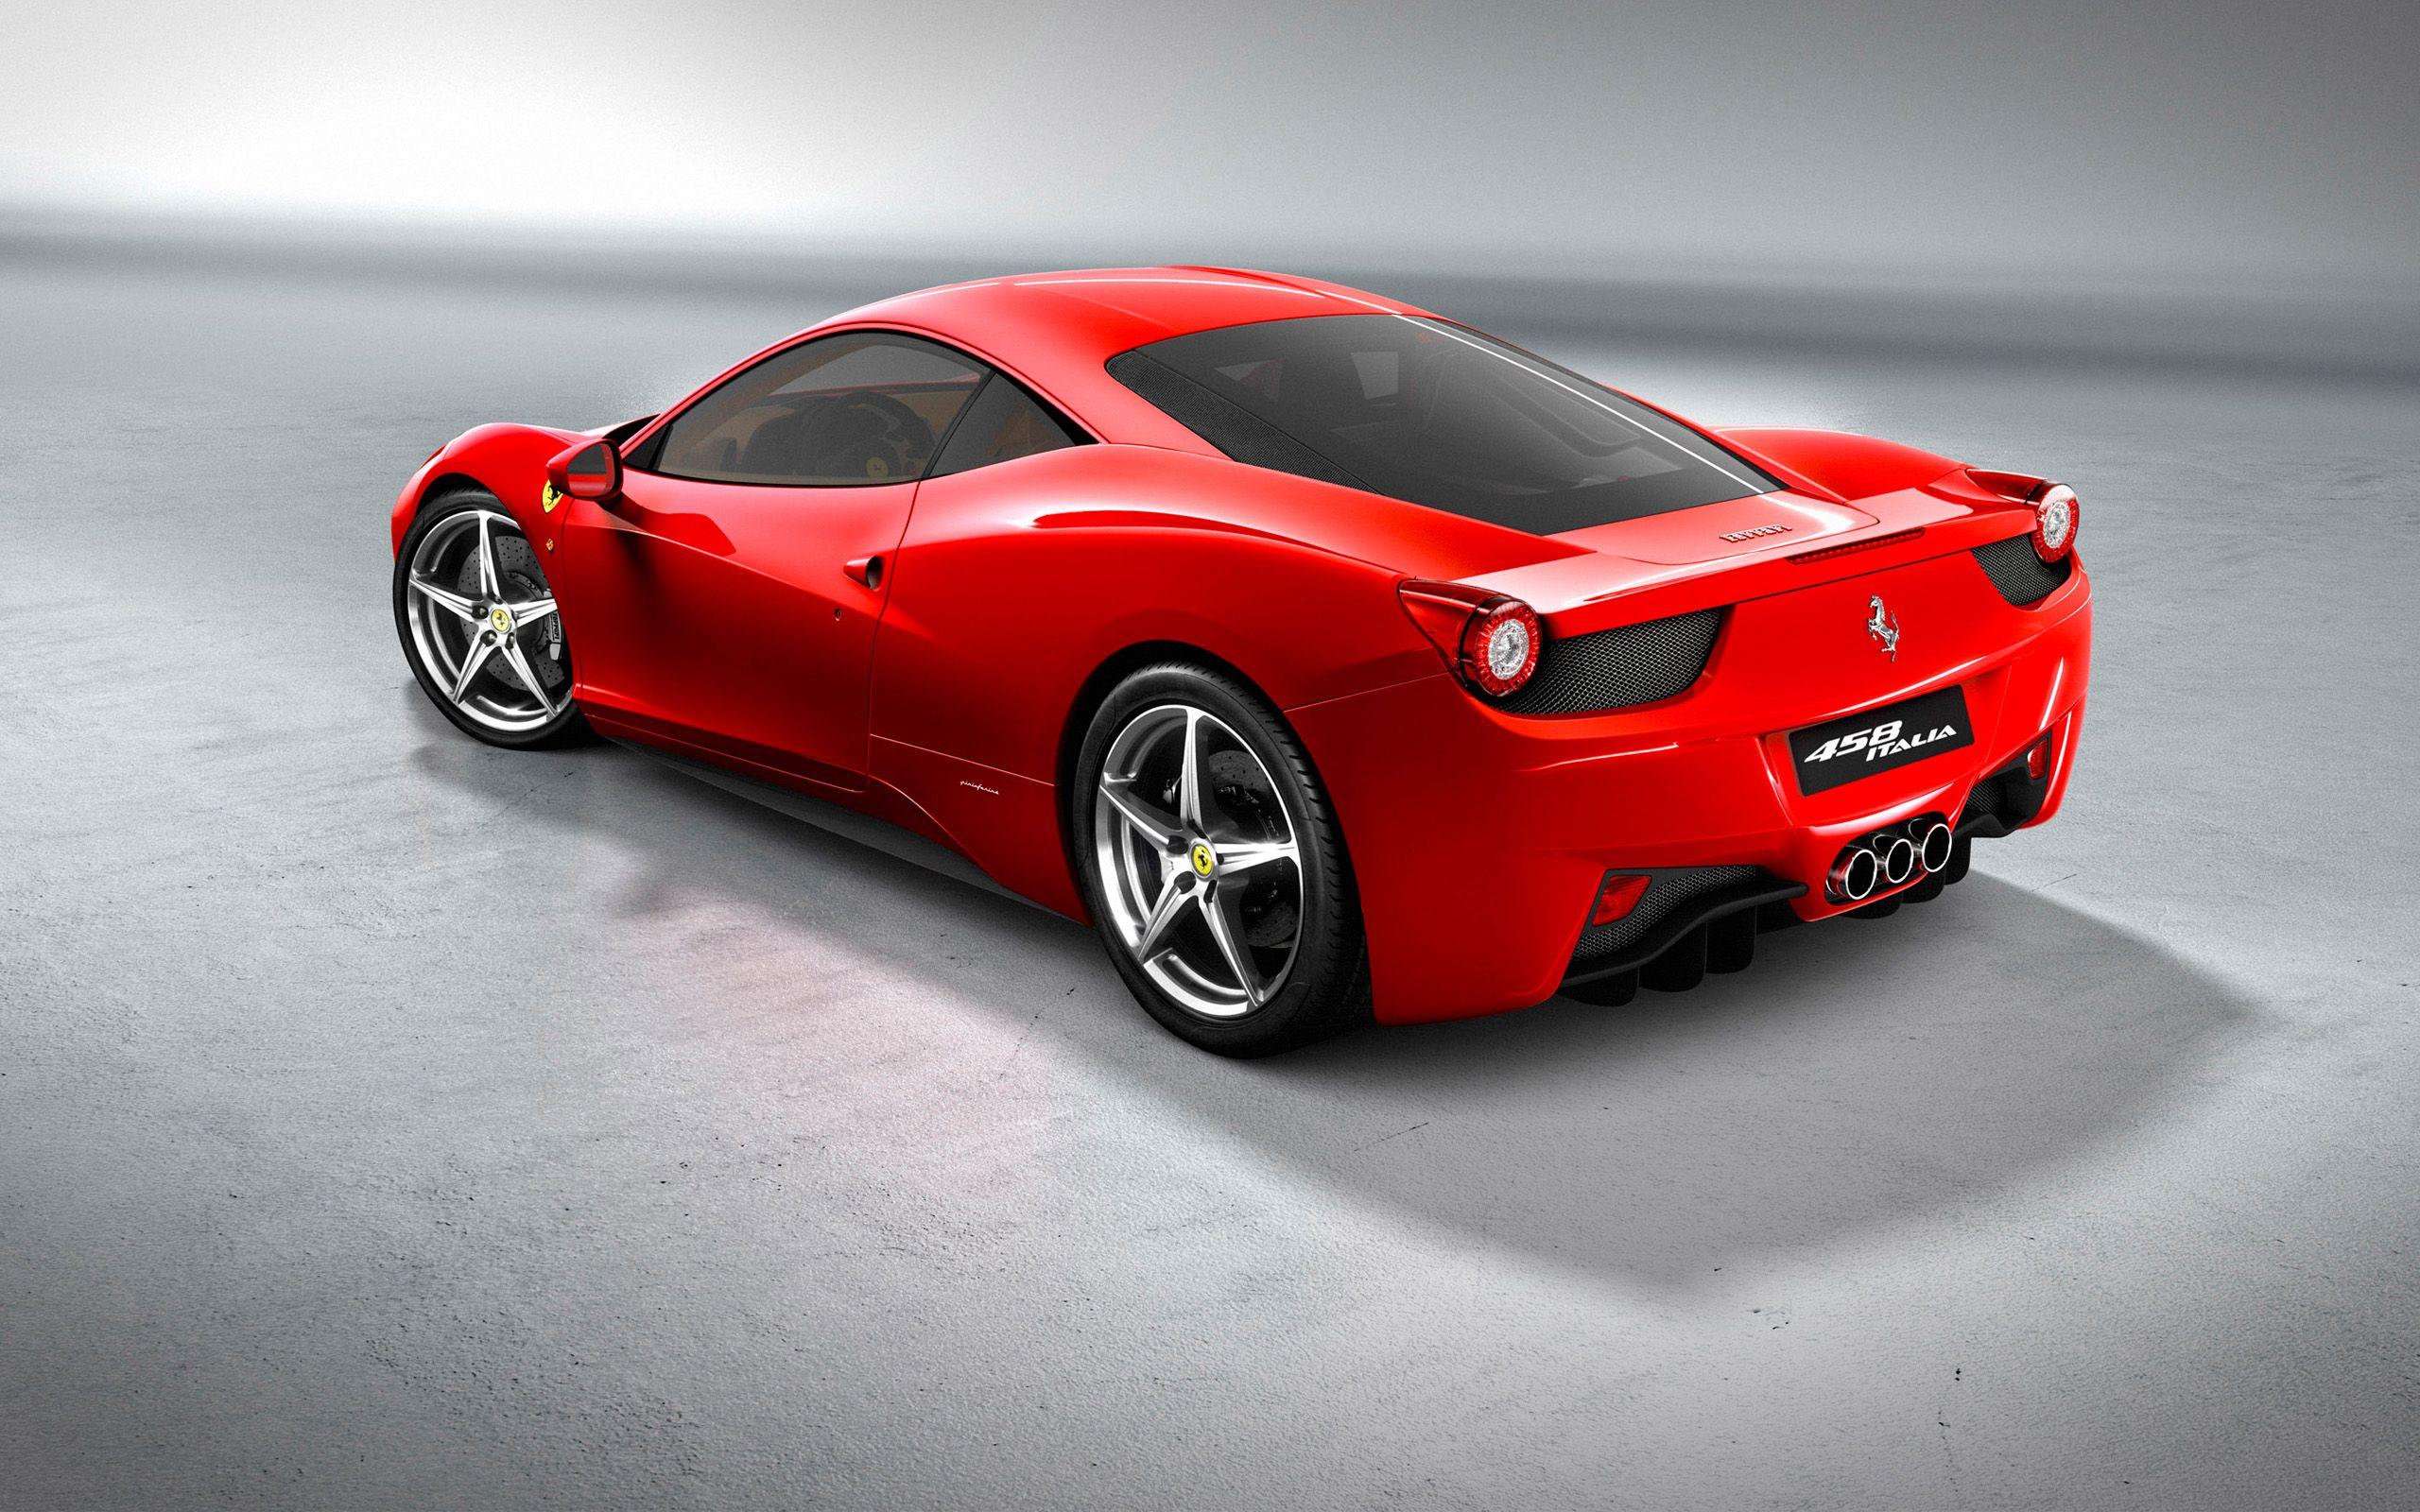 Red Ferrari Car Wallpaper 45128 2560x1600px